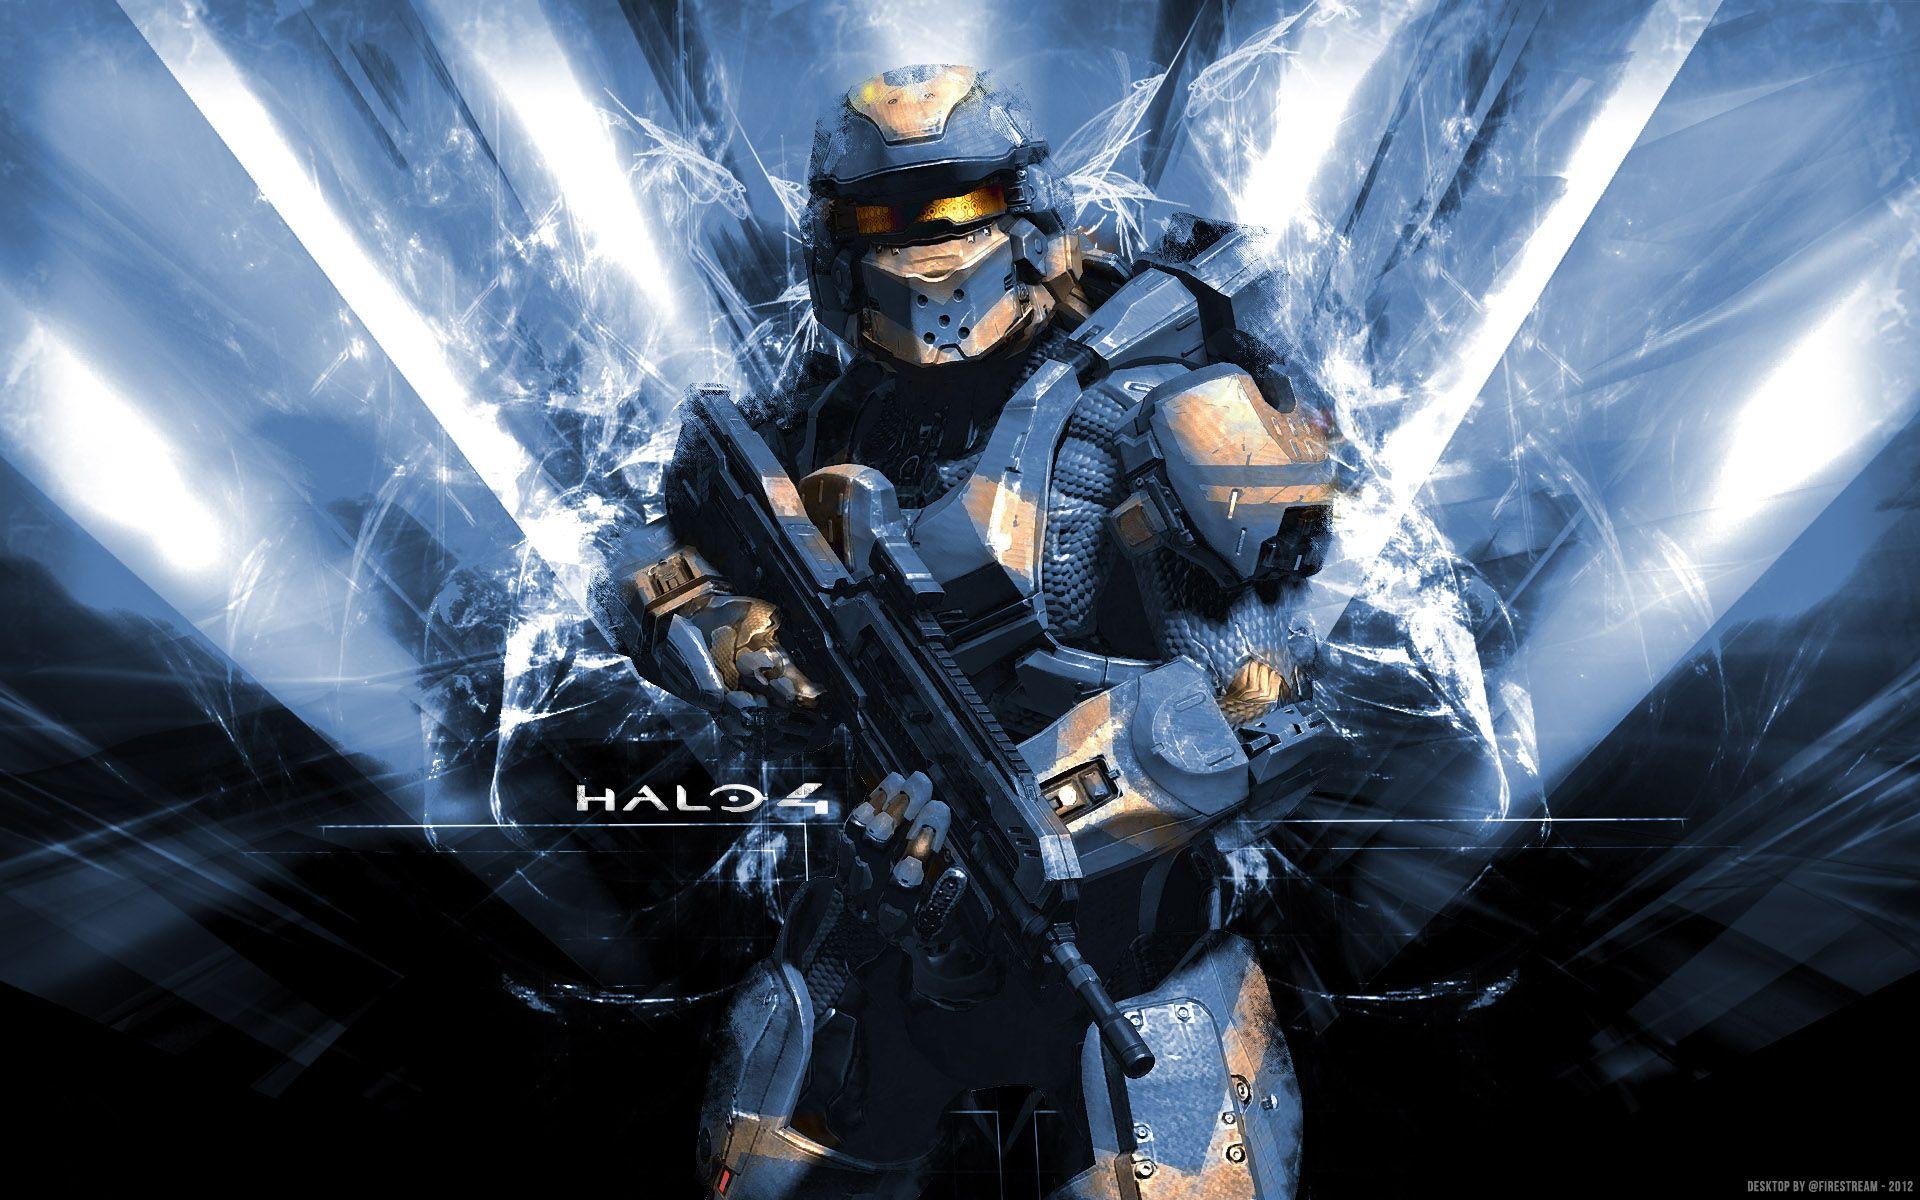 Halo 4 Wallpaper Free Download